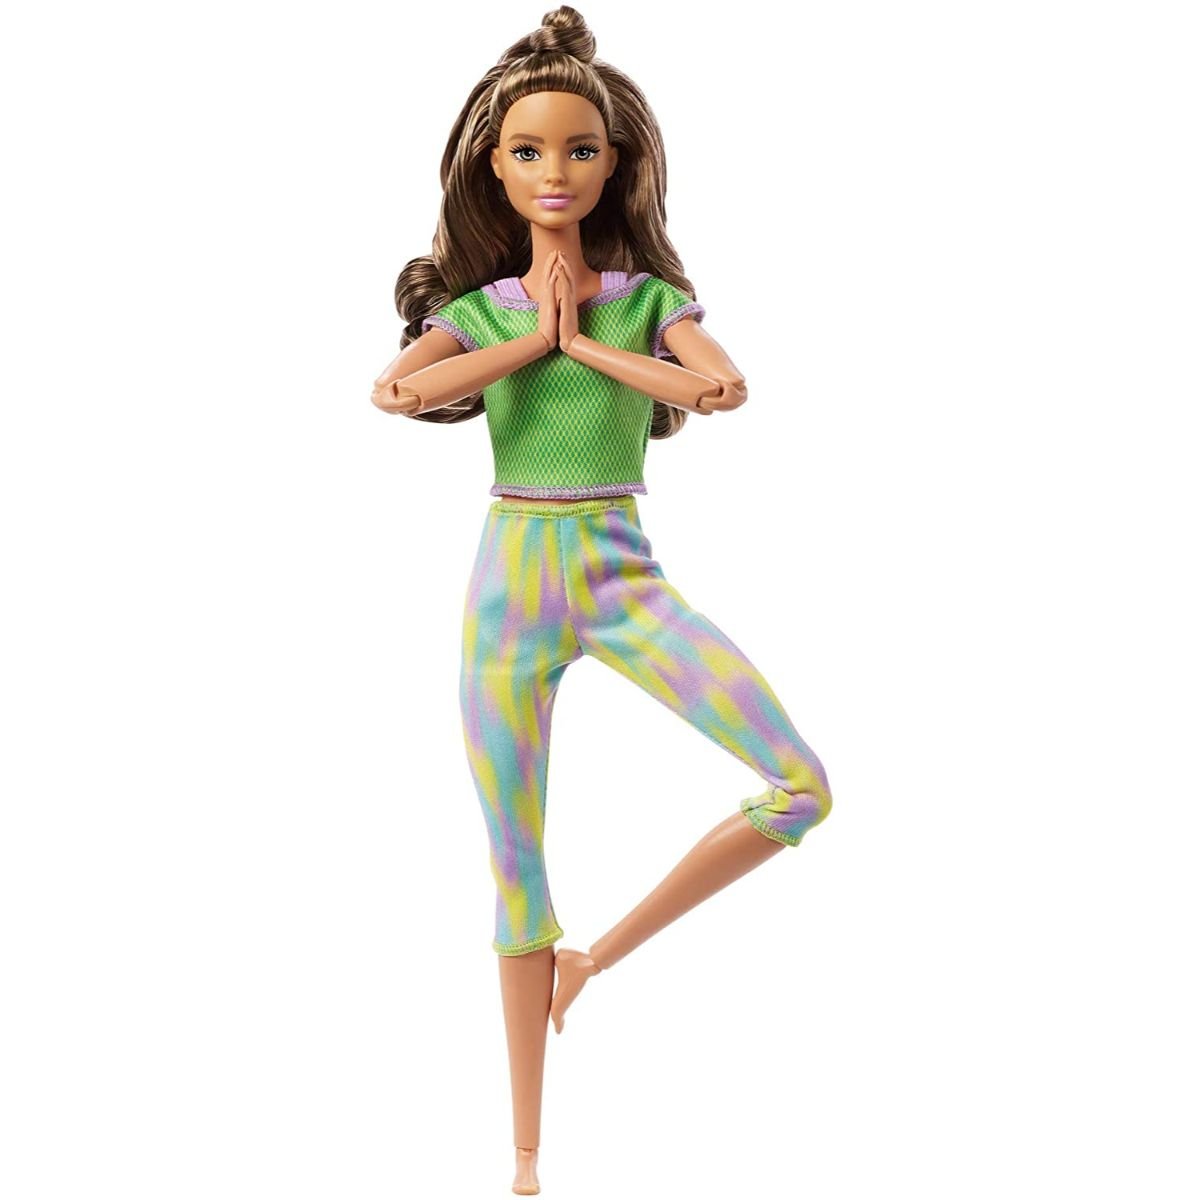 Papusa Barbie, Made to move, GXF05 Barbie